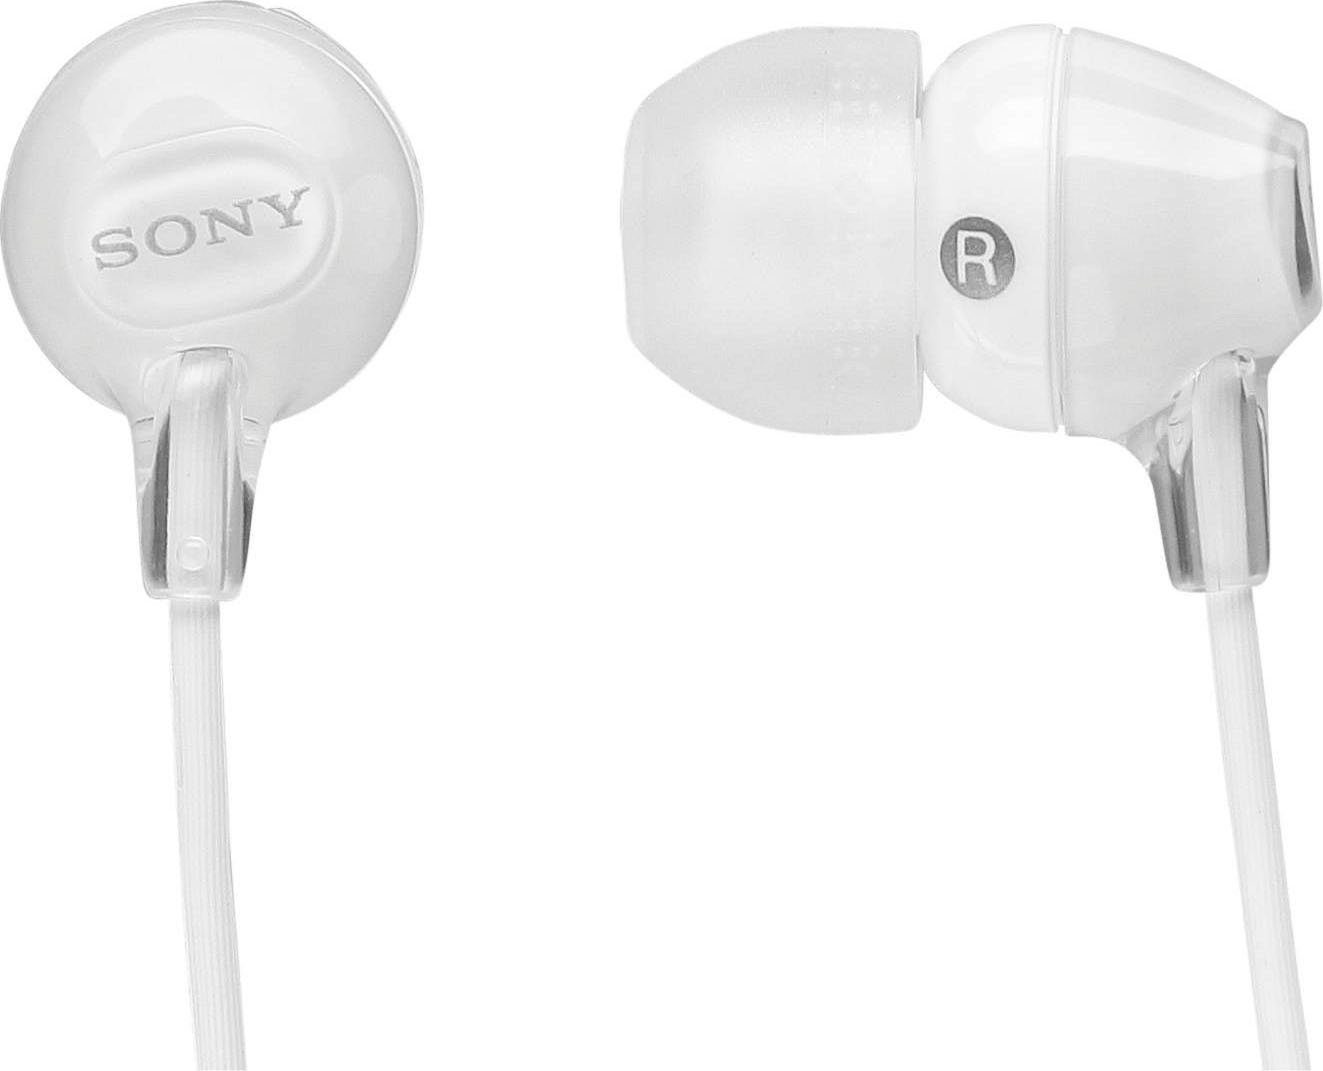 Sony weiß Fernbedienung) mit In-Ear-Kopfhörer (Rauschunterdrückung, MDR-EX15AP